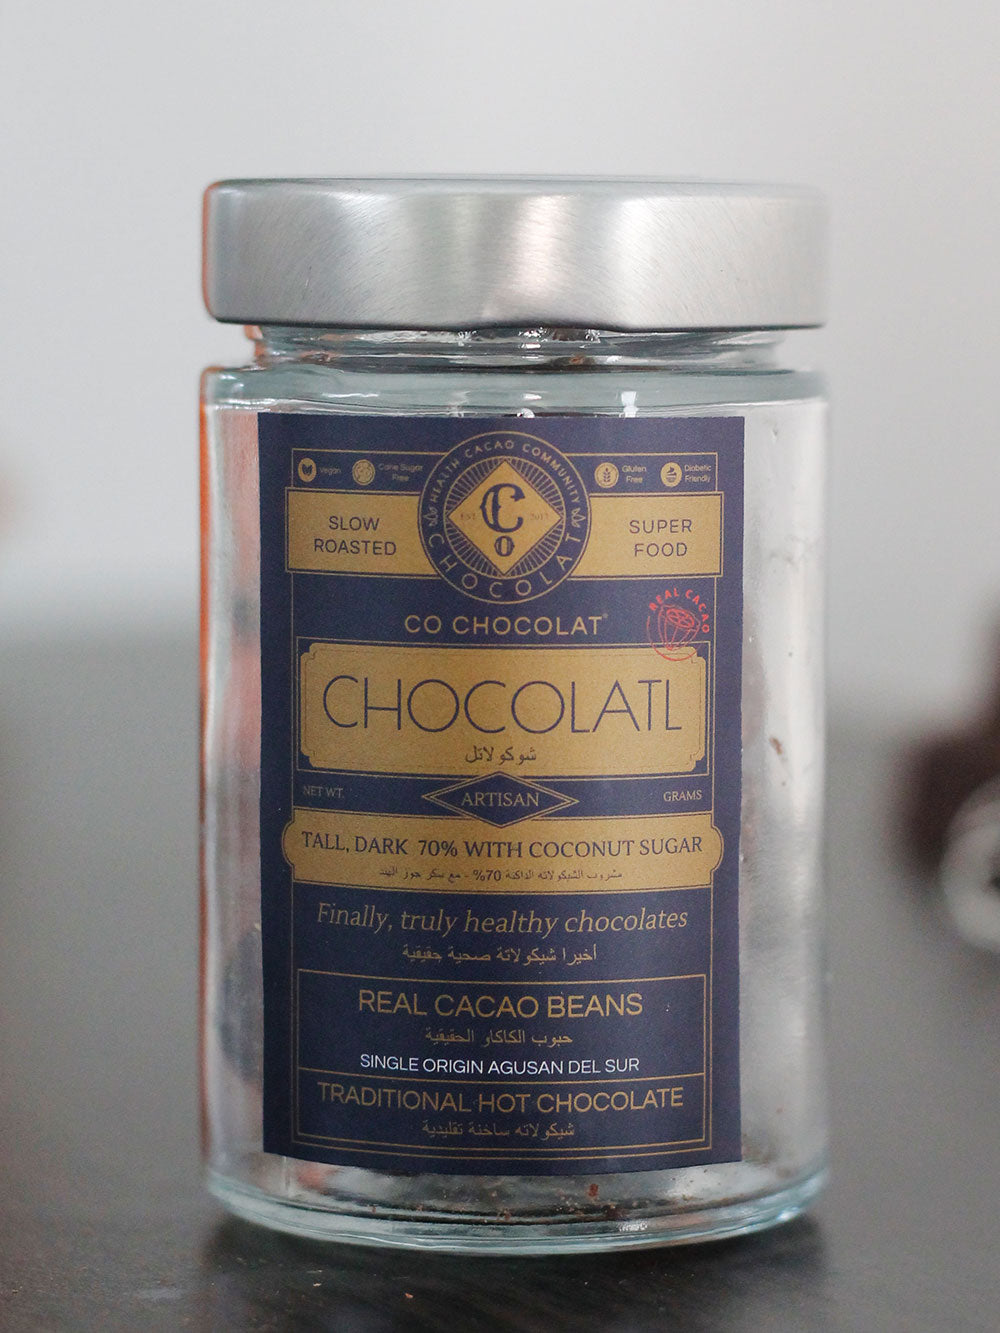 Tall, Dark 70% with Coconut Sugar Hot Chocolate - Vegan, Refined Sugar-Free, Gluten-Free, Nut-Free